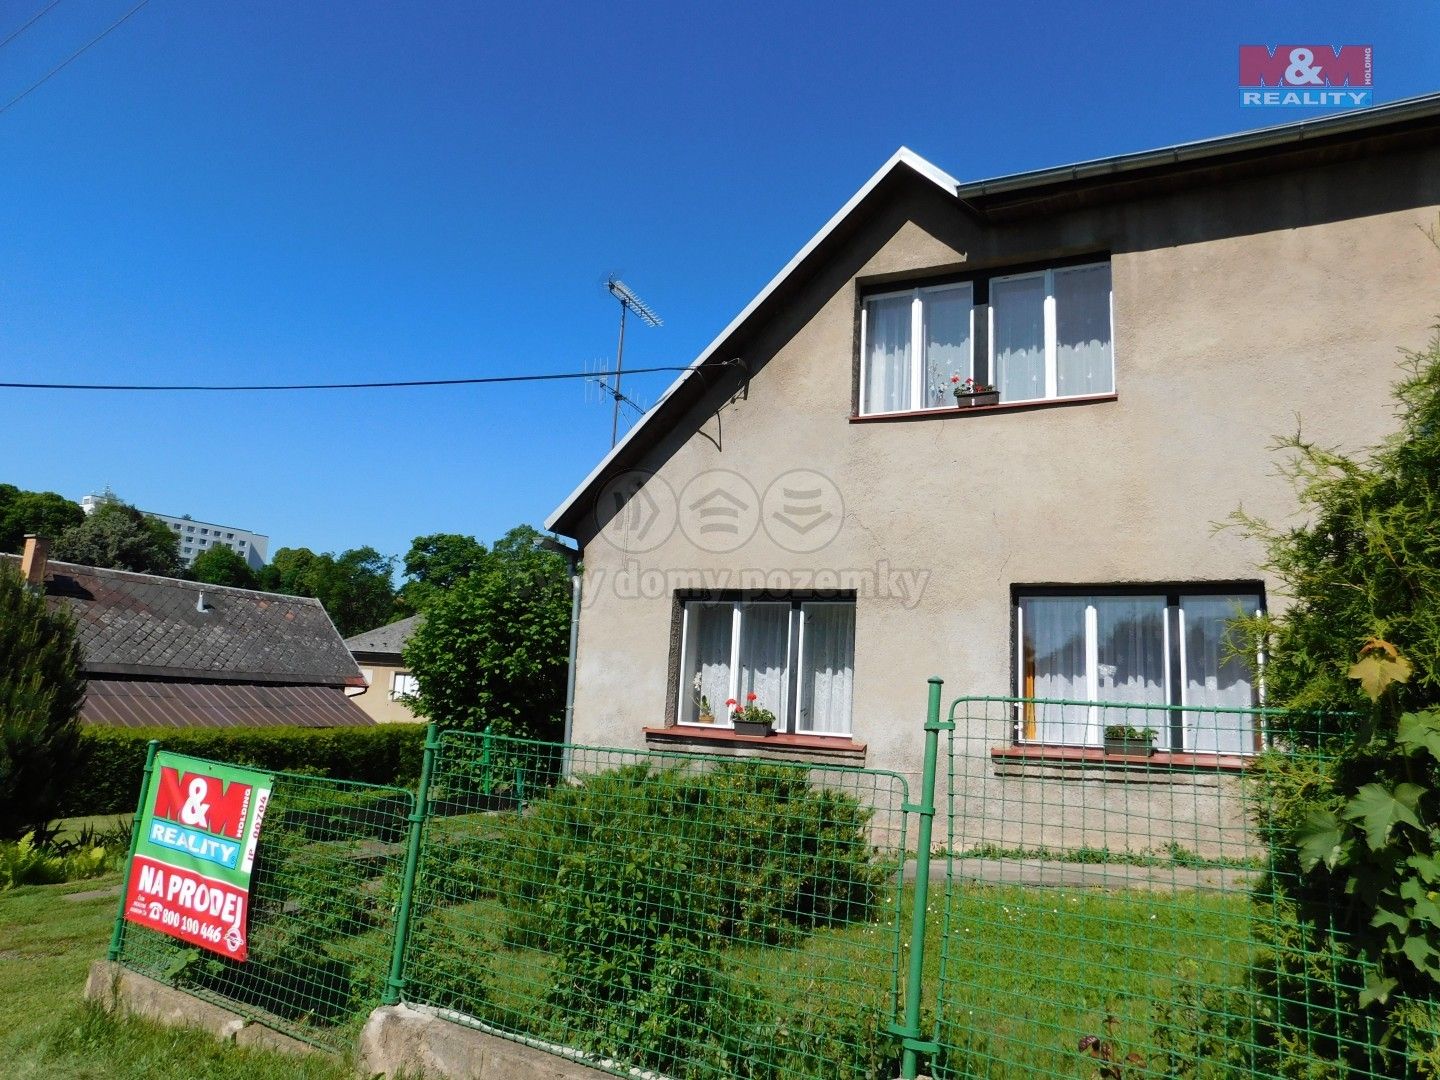 Rodinné domy, Na Strži, Nová Paka, 146 m²